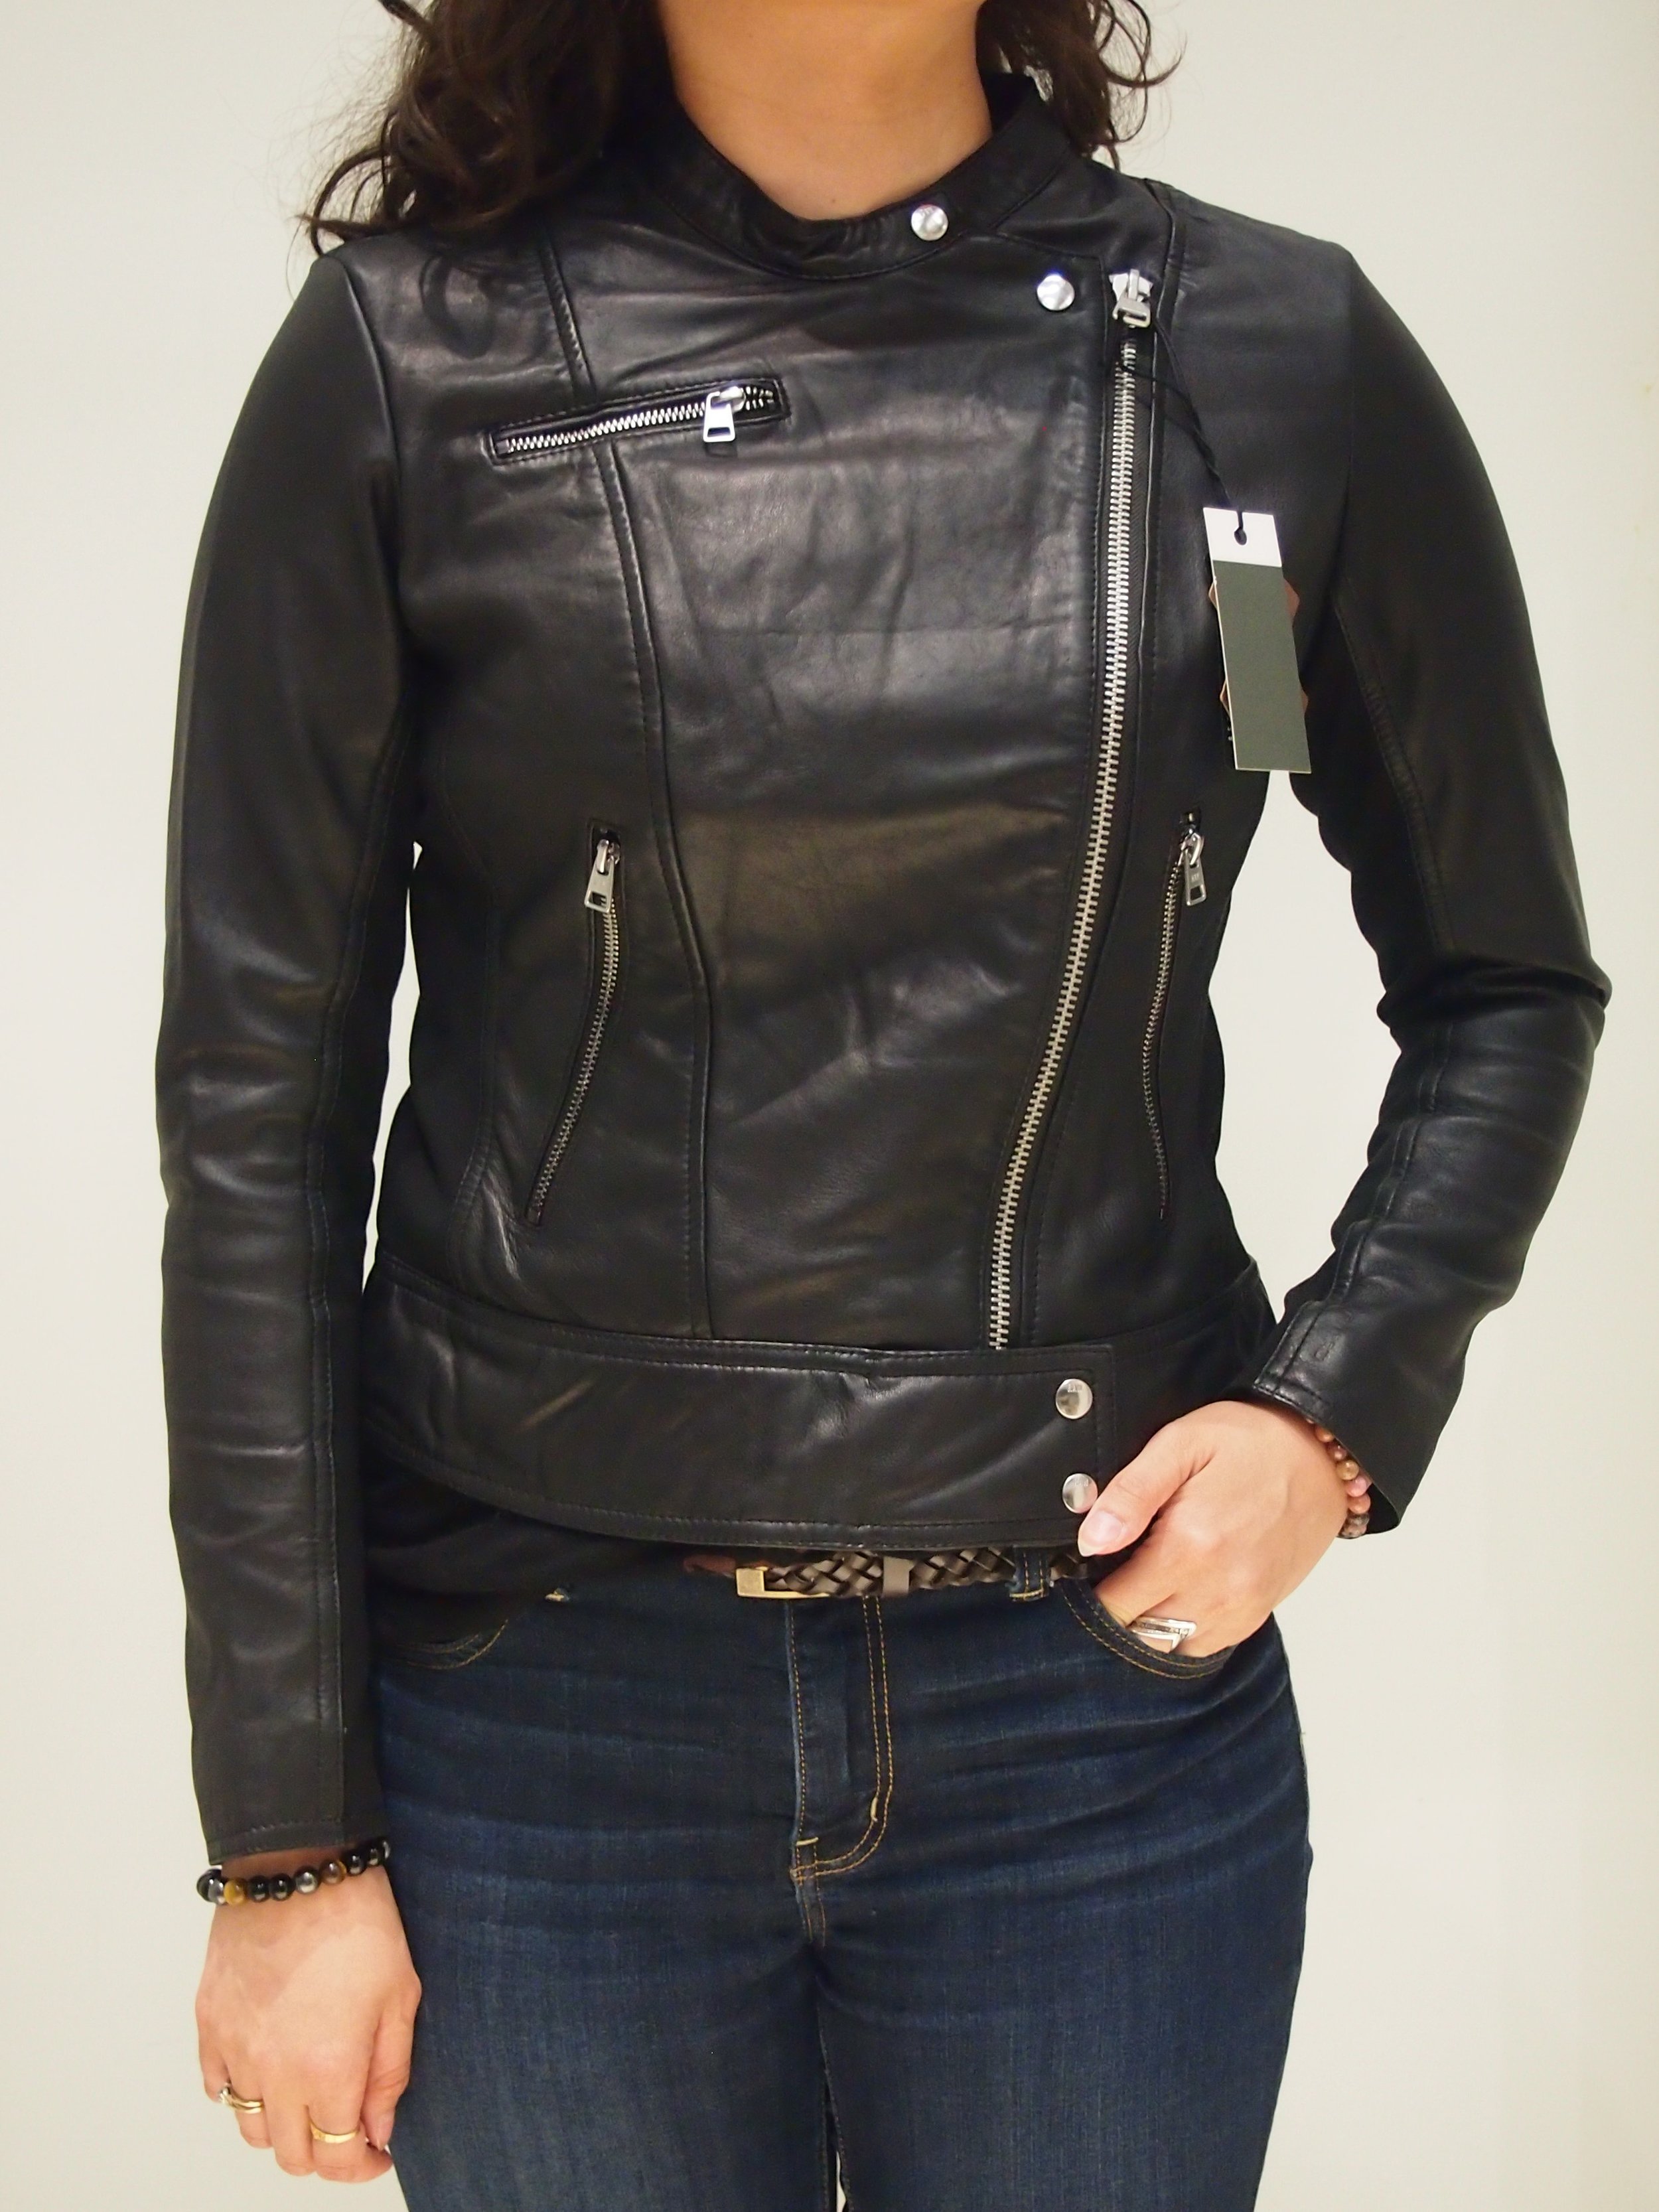 G-Star Gluon Biker Slim Leather Jacket global atomic designs inc